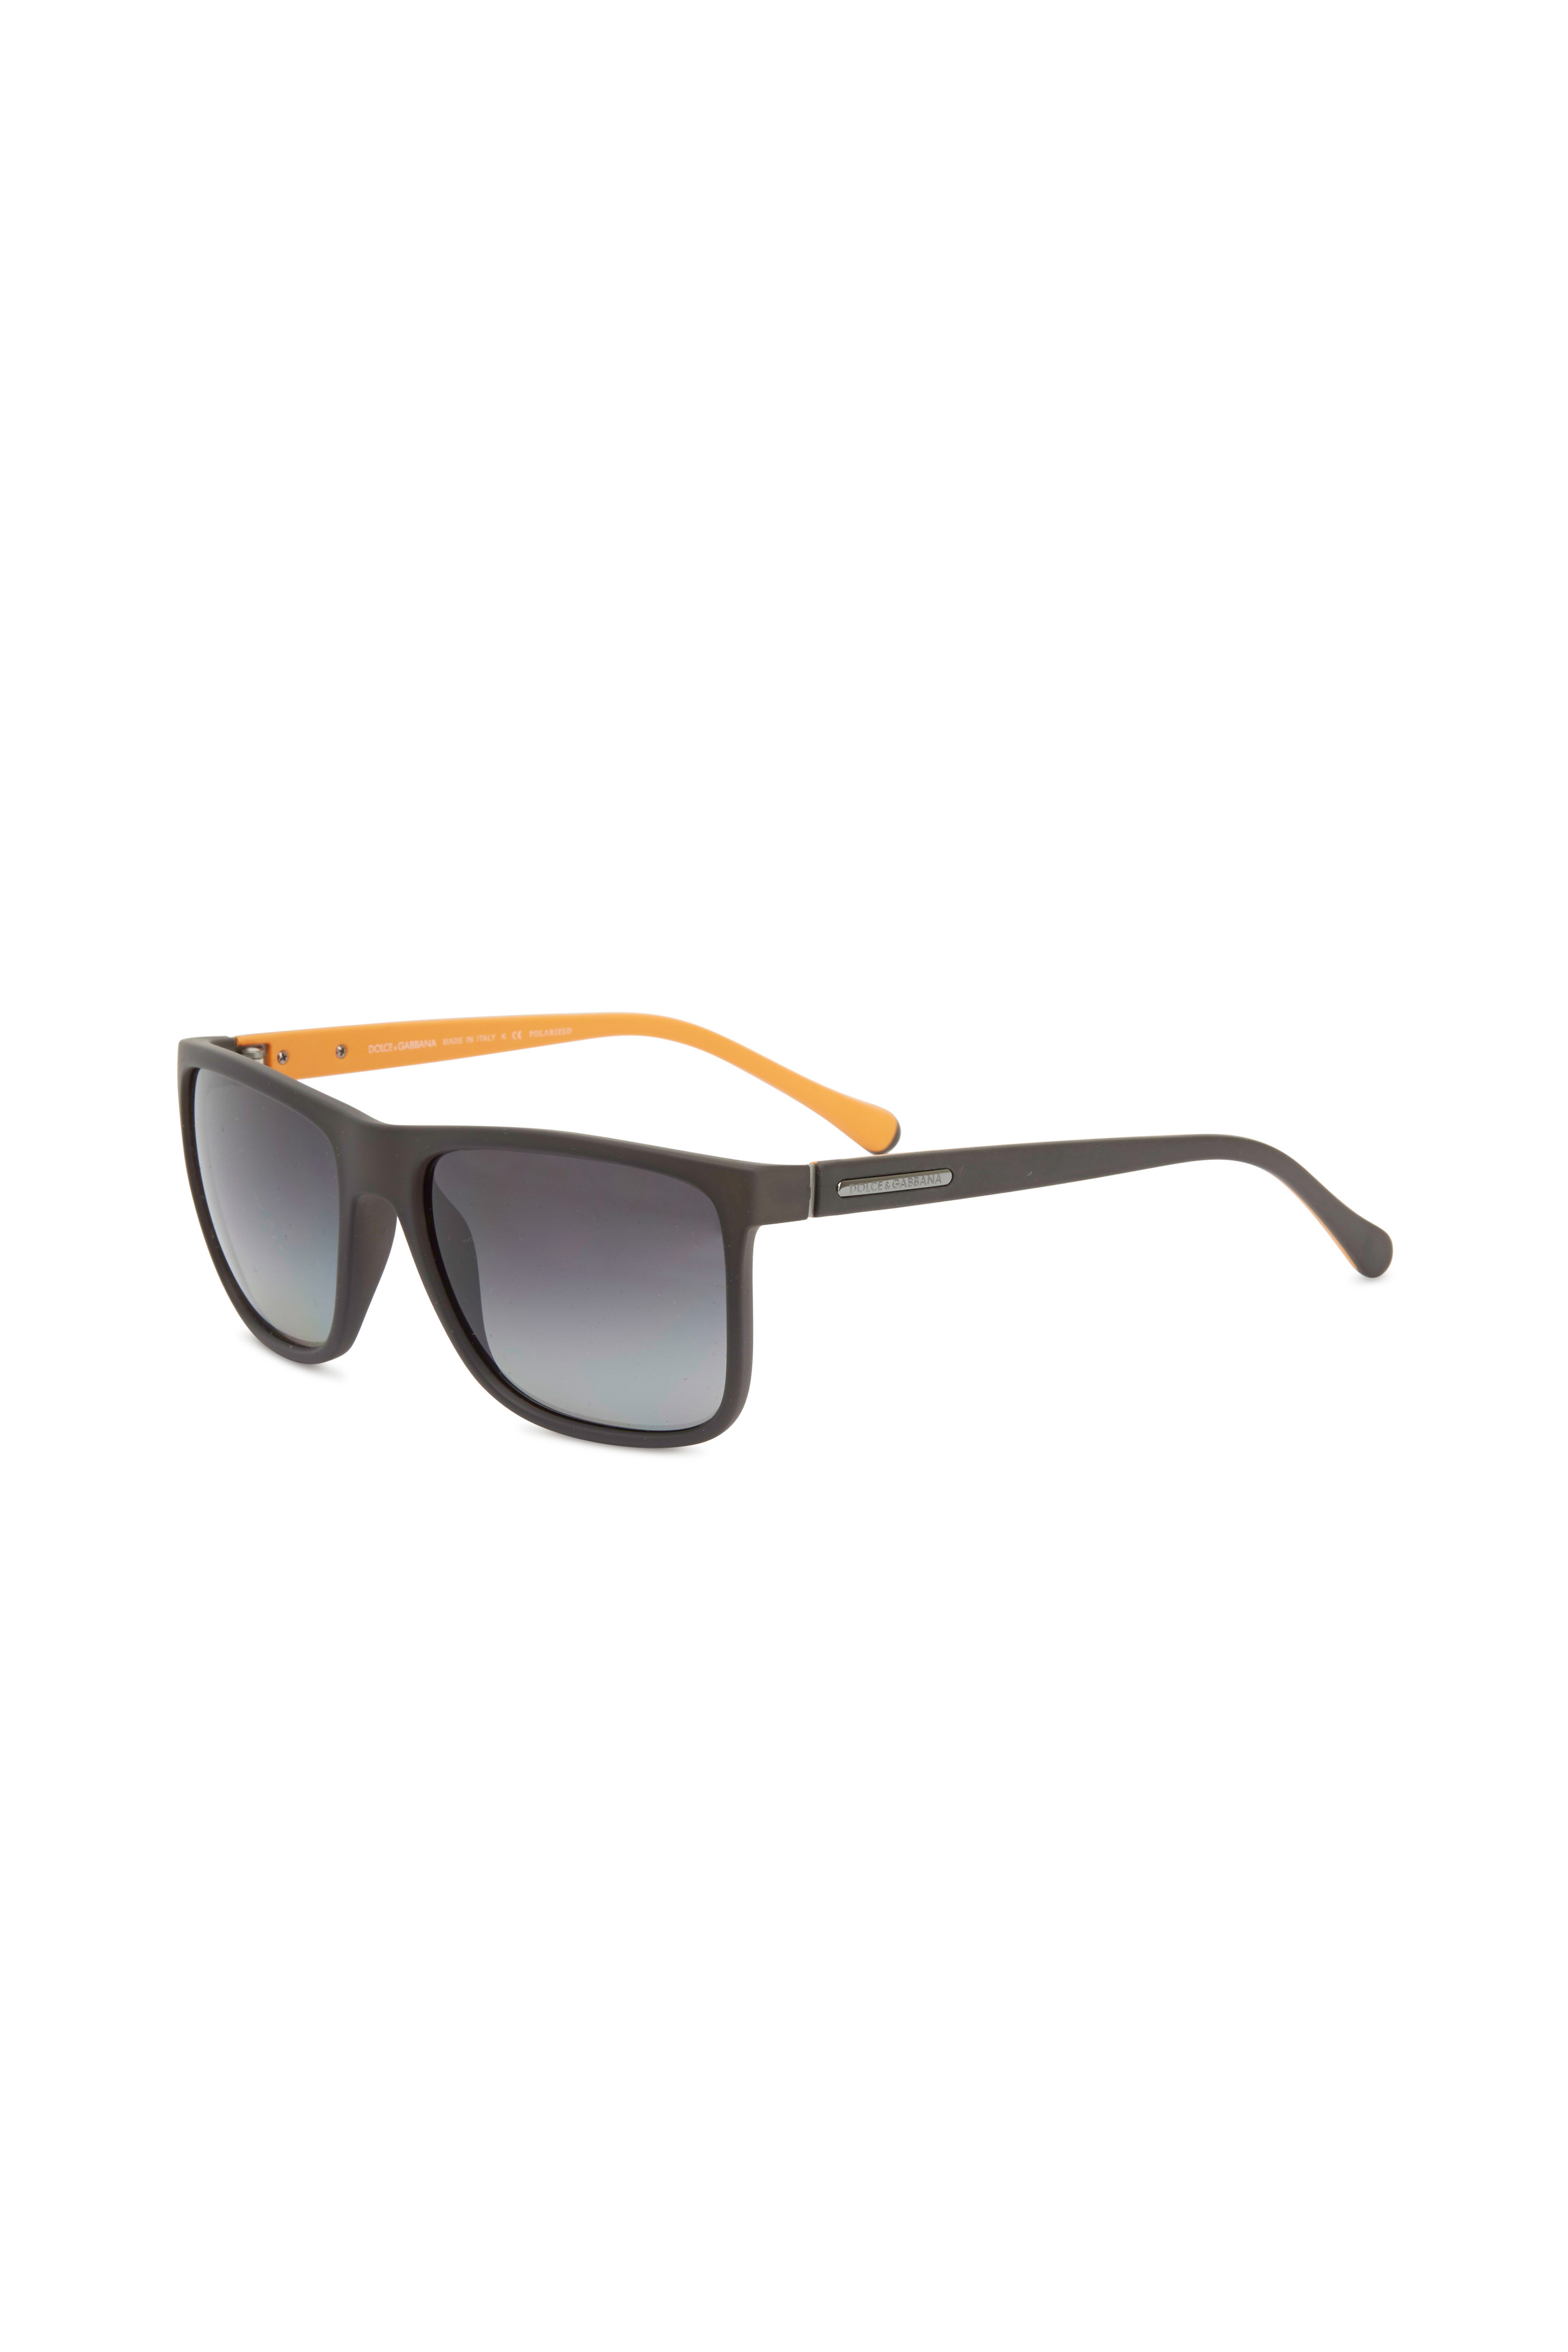 dolce gabbana orange sunglasses